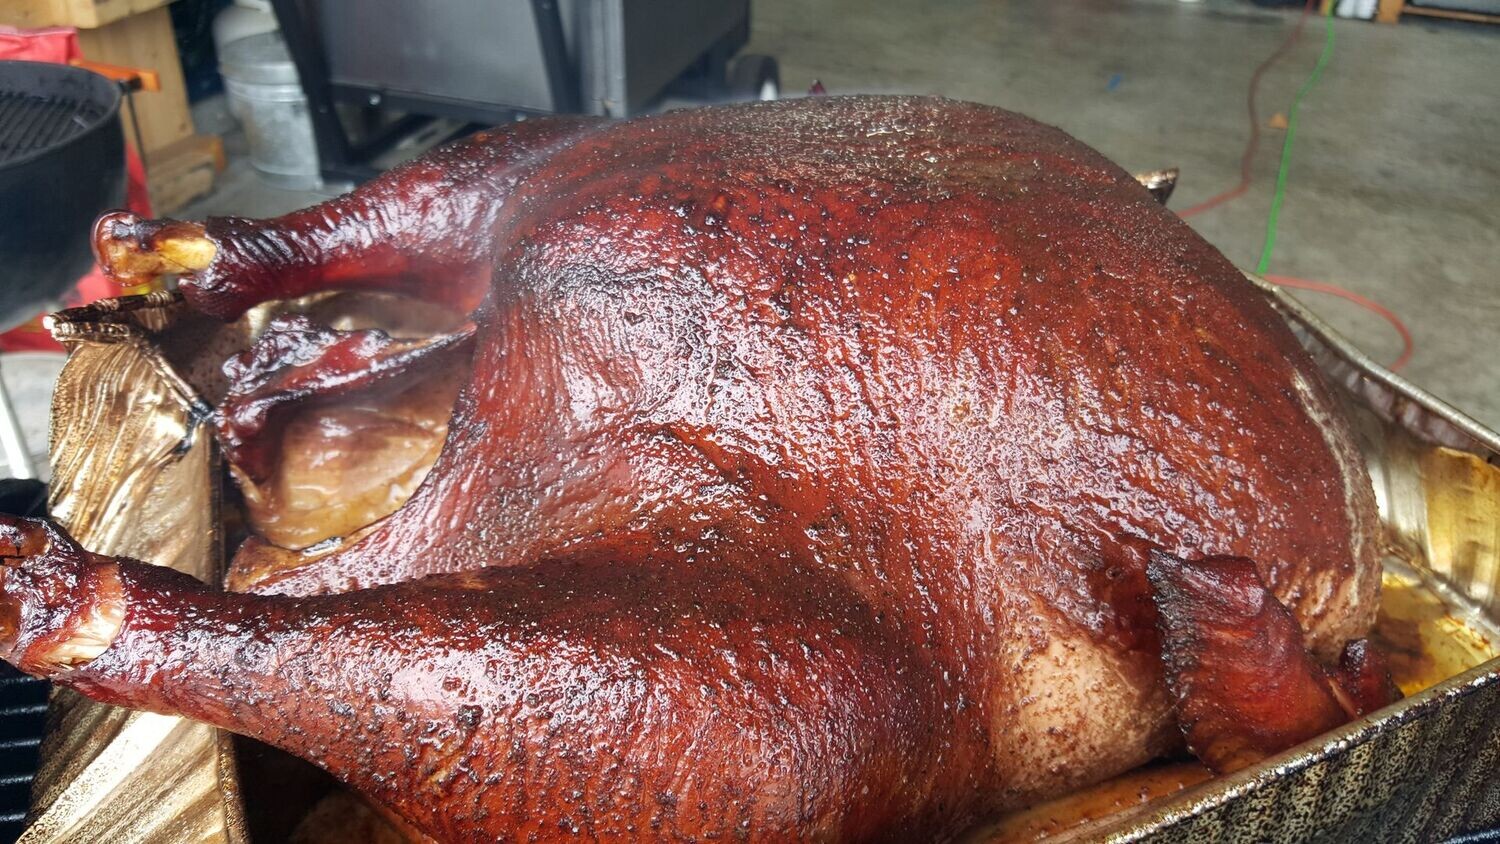 Saturday, Nov 16 - Thanksgiving Treats (Boneless Turkey Breasts, Whole Turkey, Leftovers dish, side, cocktails) - Kansas City (Free to Attend)